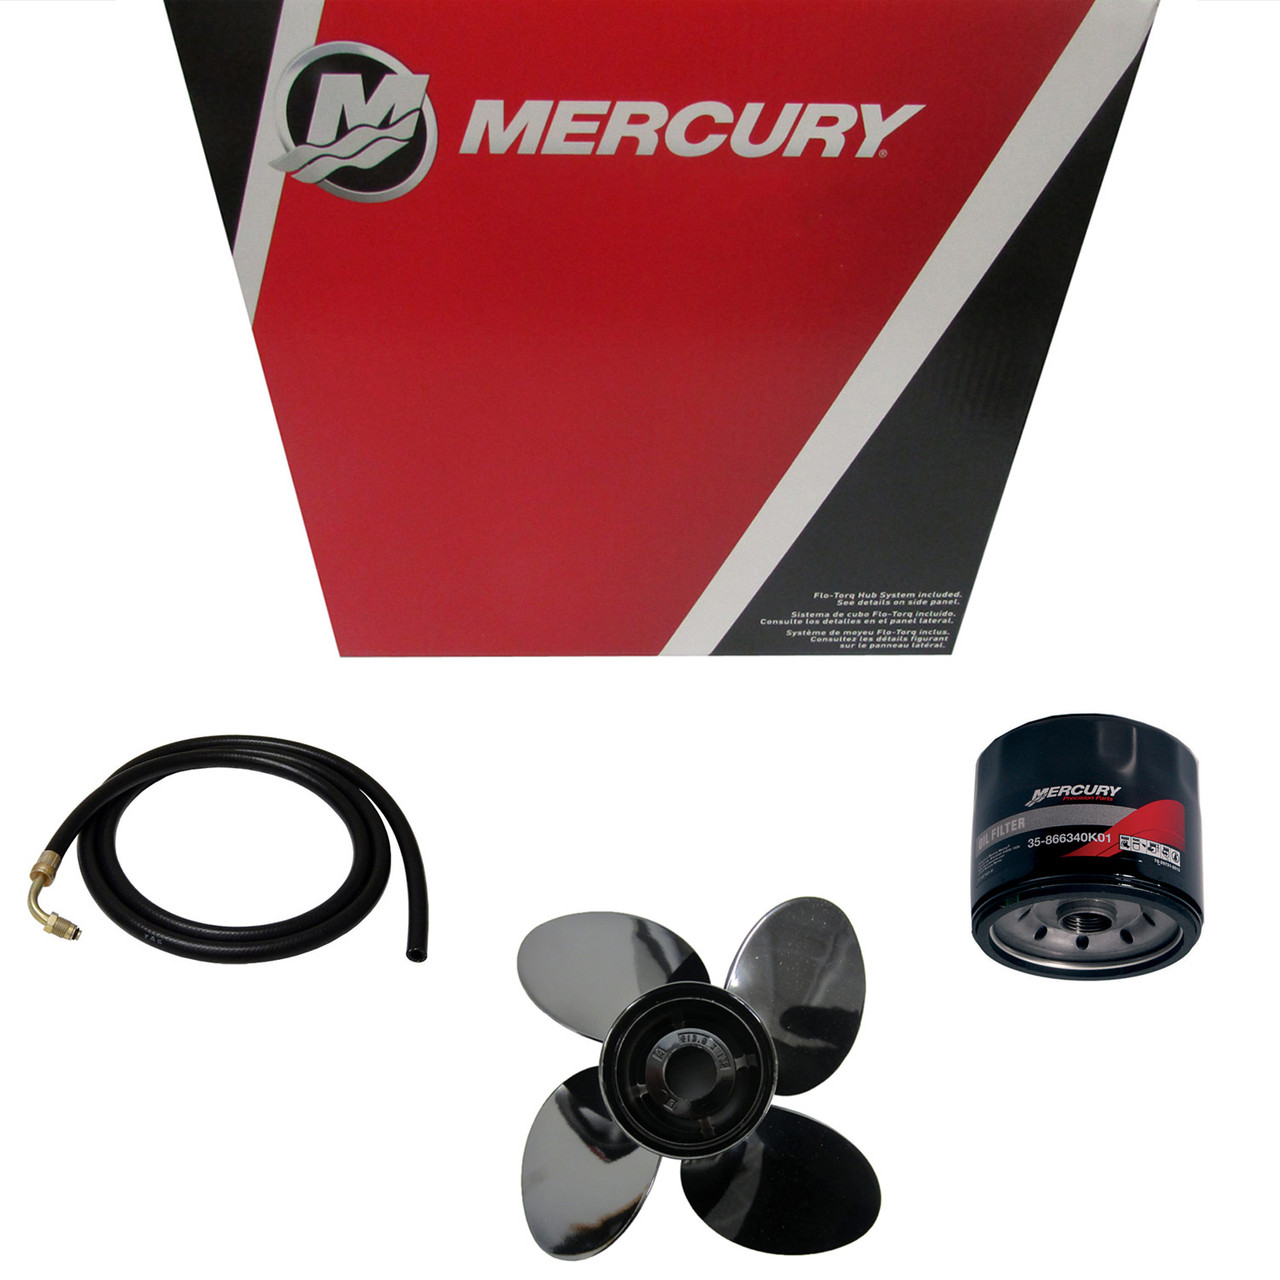 Mercury Marine / Mercruiser New OEM Trophy+ 13.75X25, 48-8M0151394